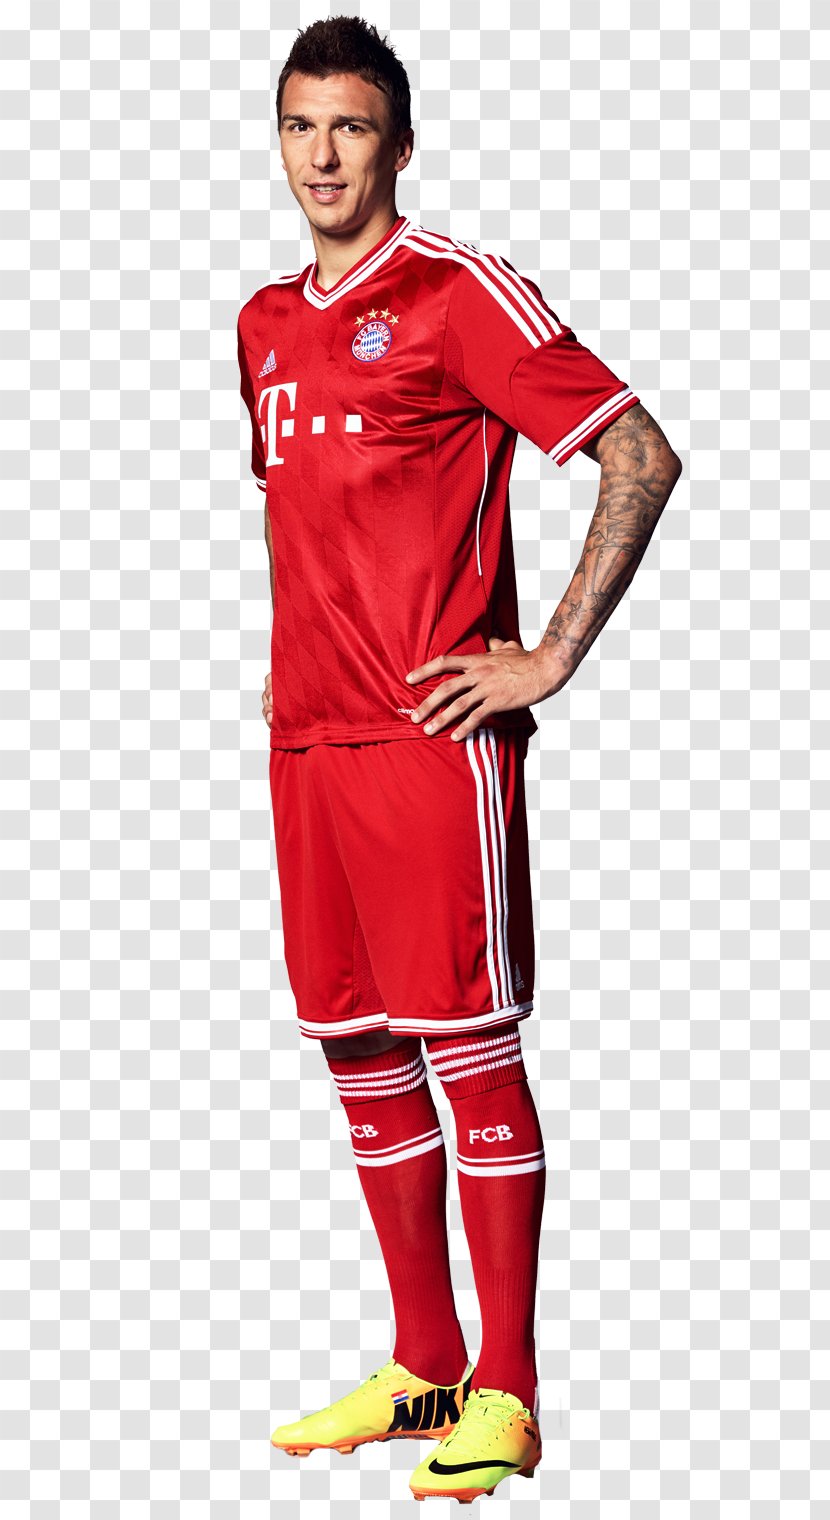 Mario Mandžukić FC Bayern Munich Croatia National Football Team Player - Mandzukic Transparent PNG